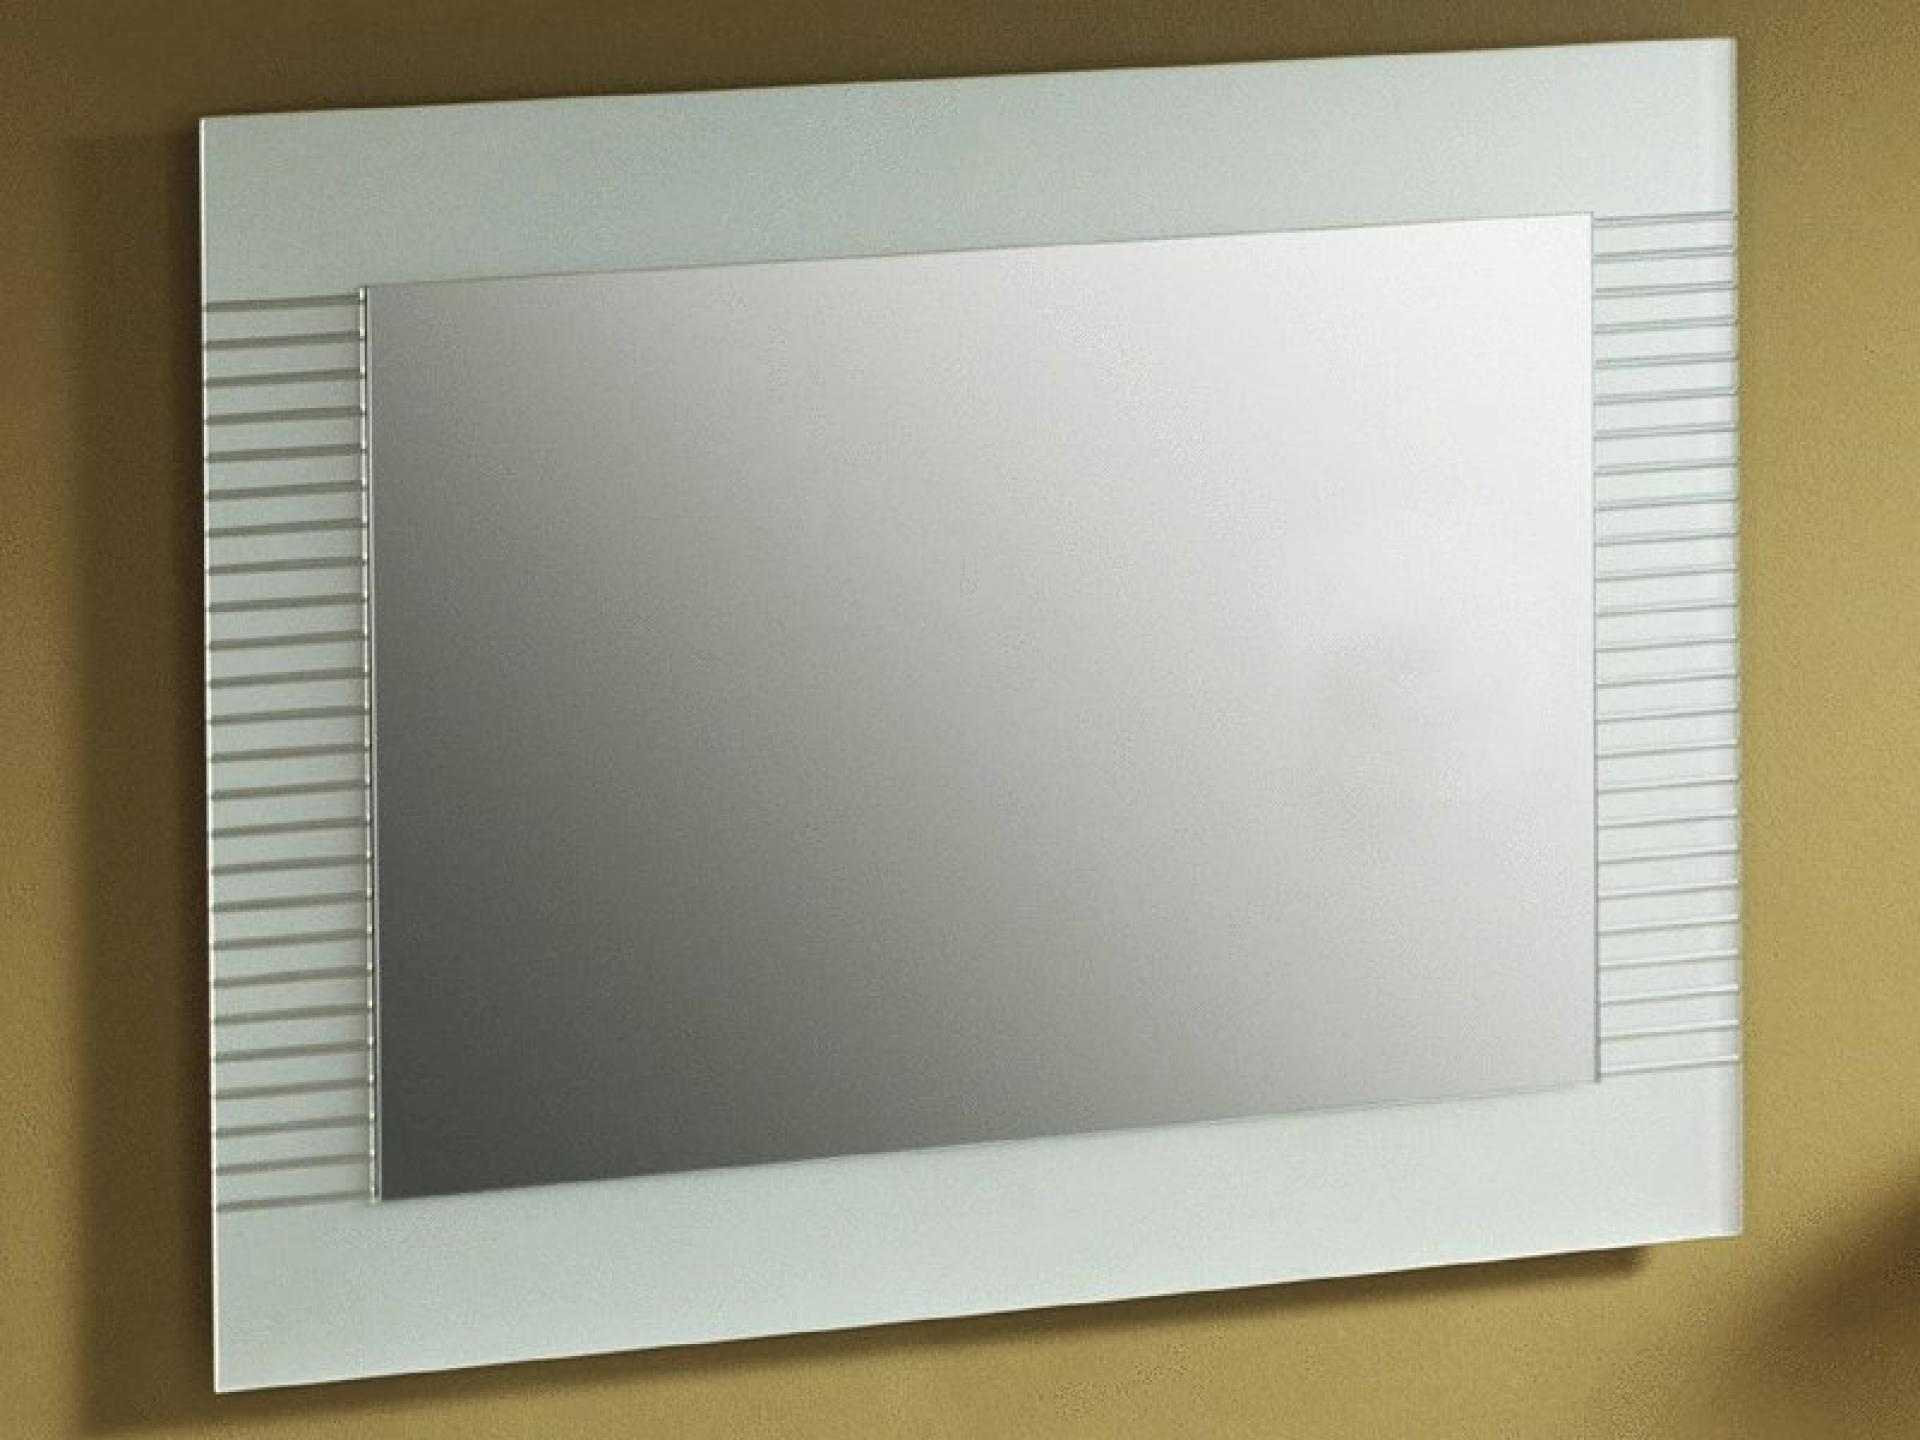 Зеркало для ванной комнаты Roca Senso 812164000